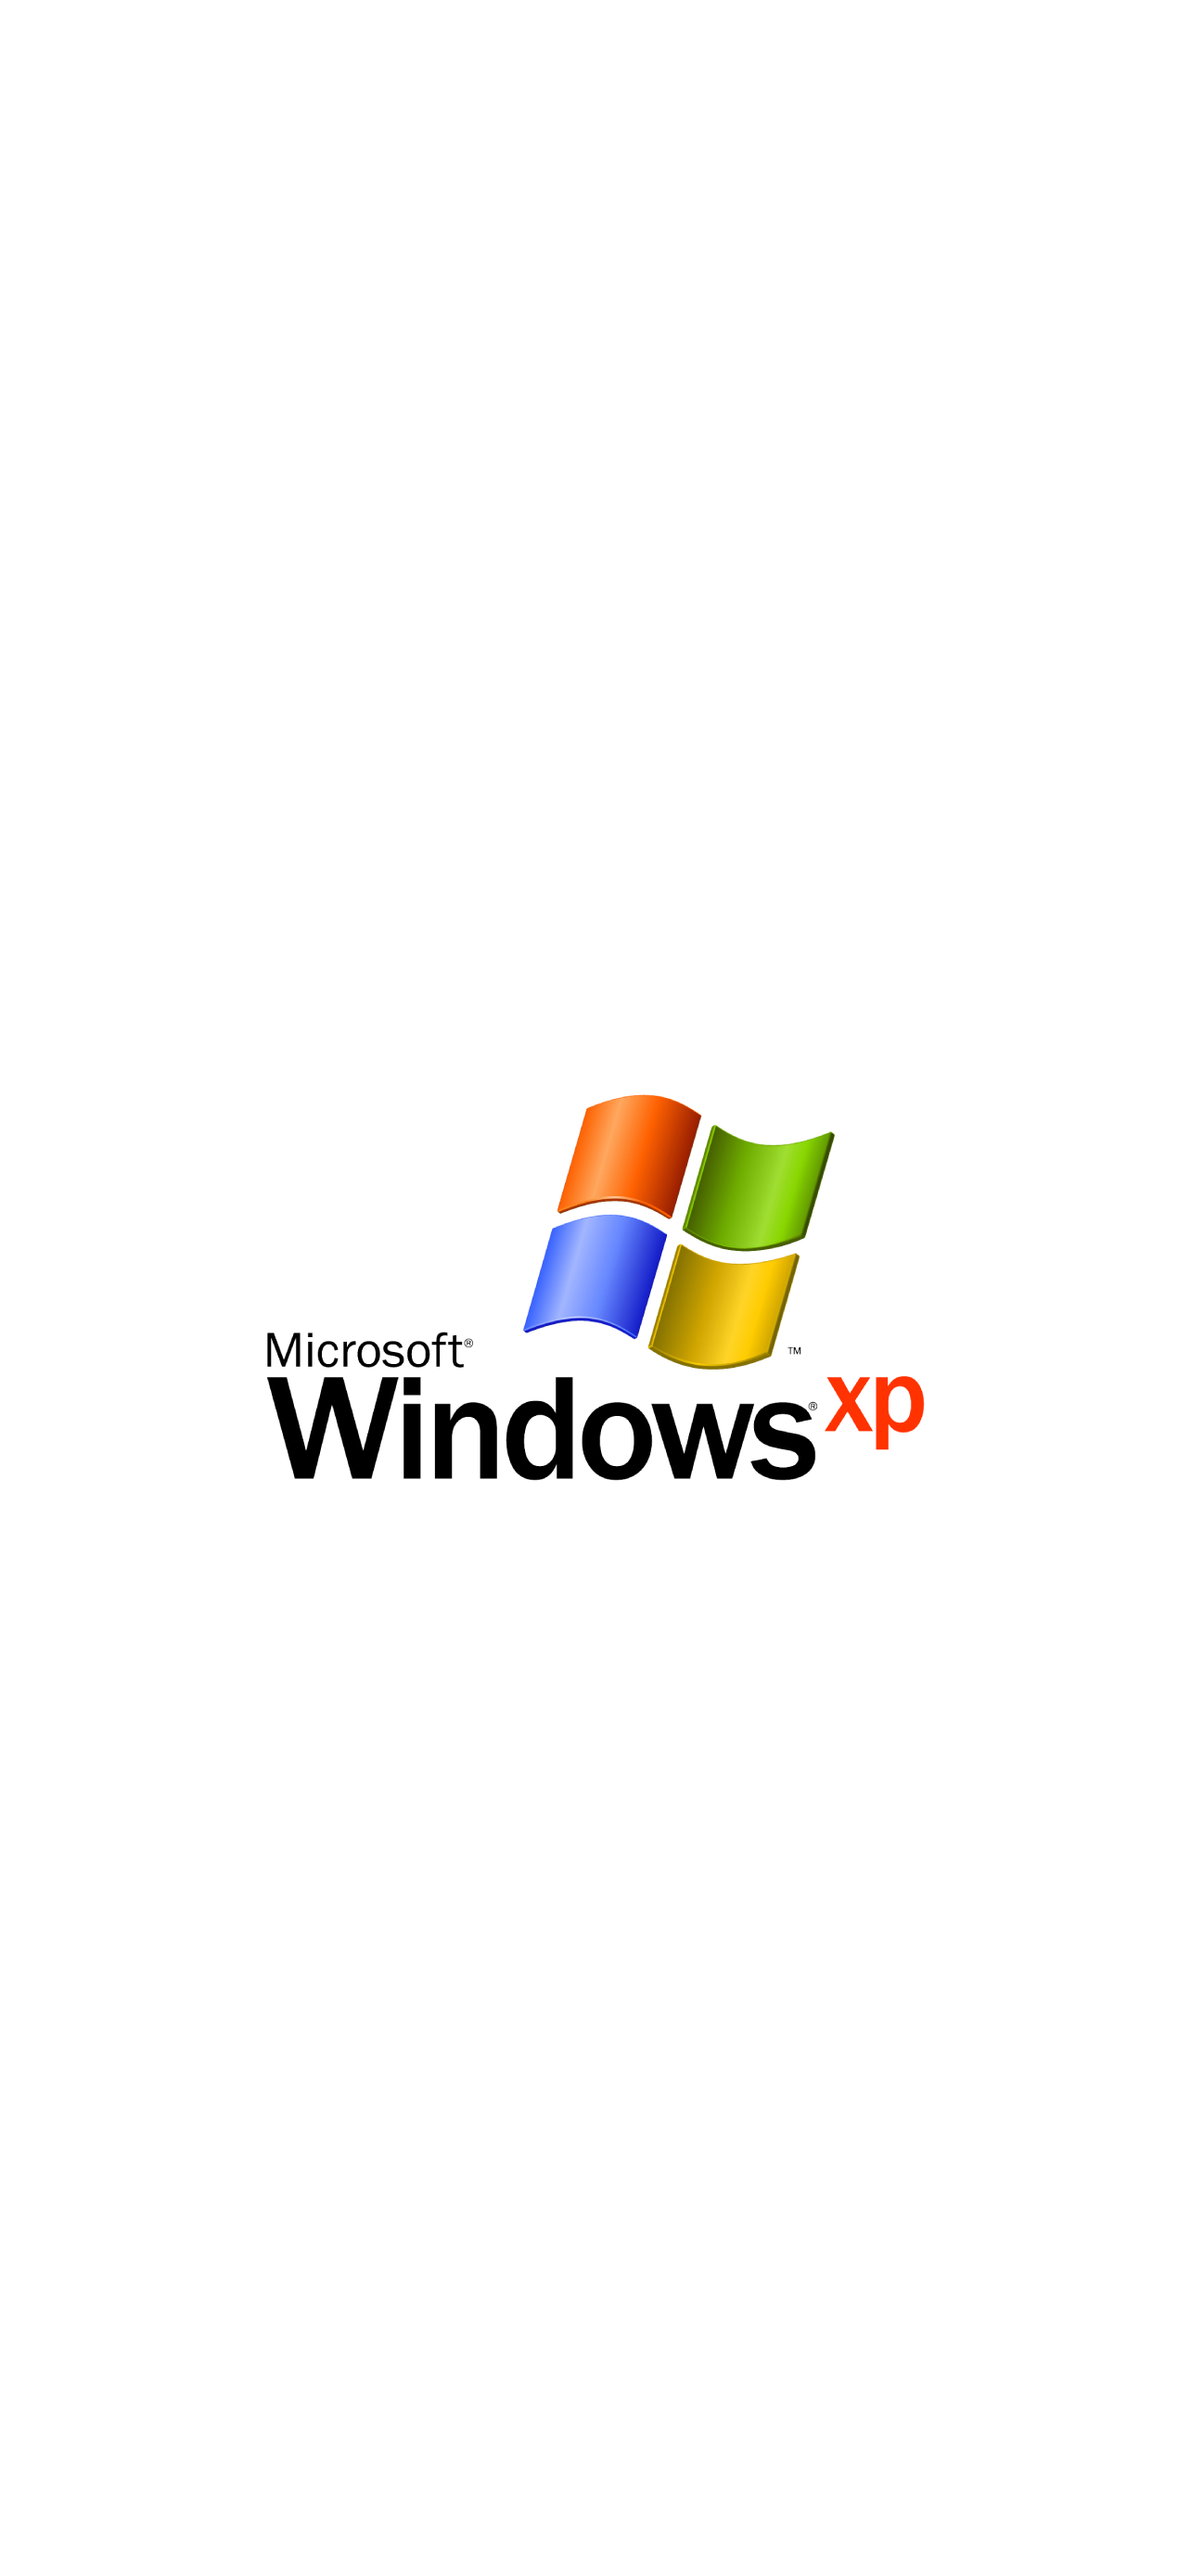 Windows XP HD Wallpaper iPhone 6 / 6S - HD Wallpaper - Wallpapers.net